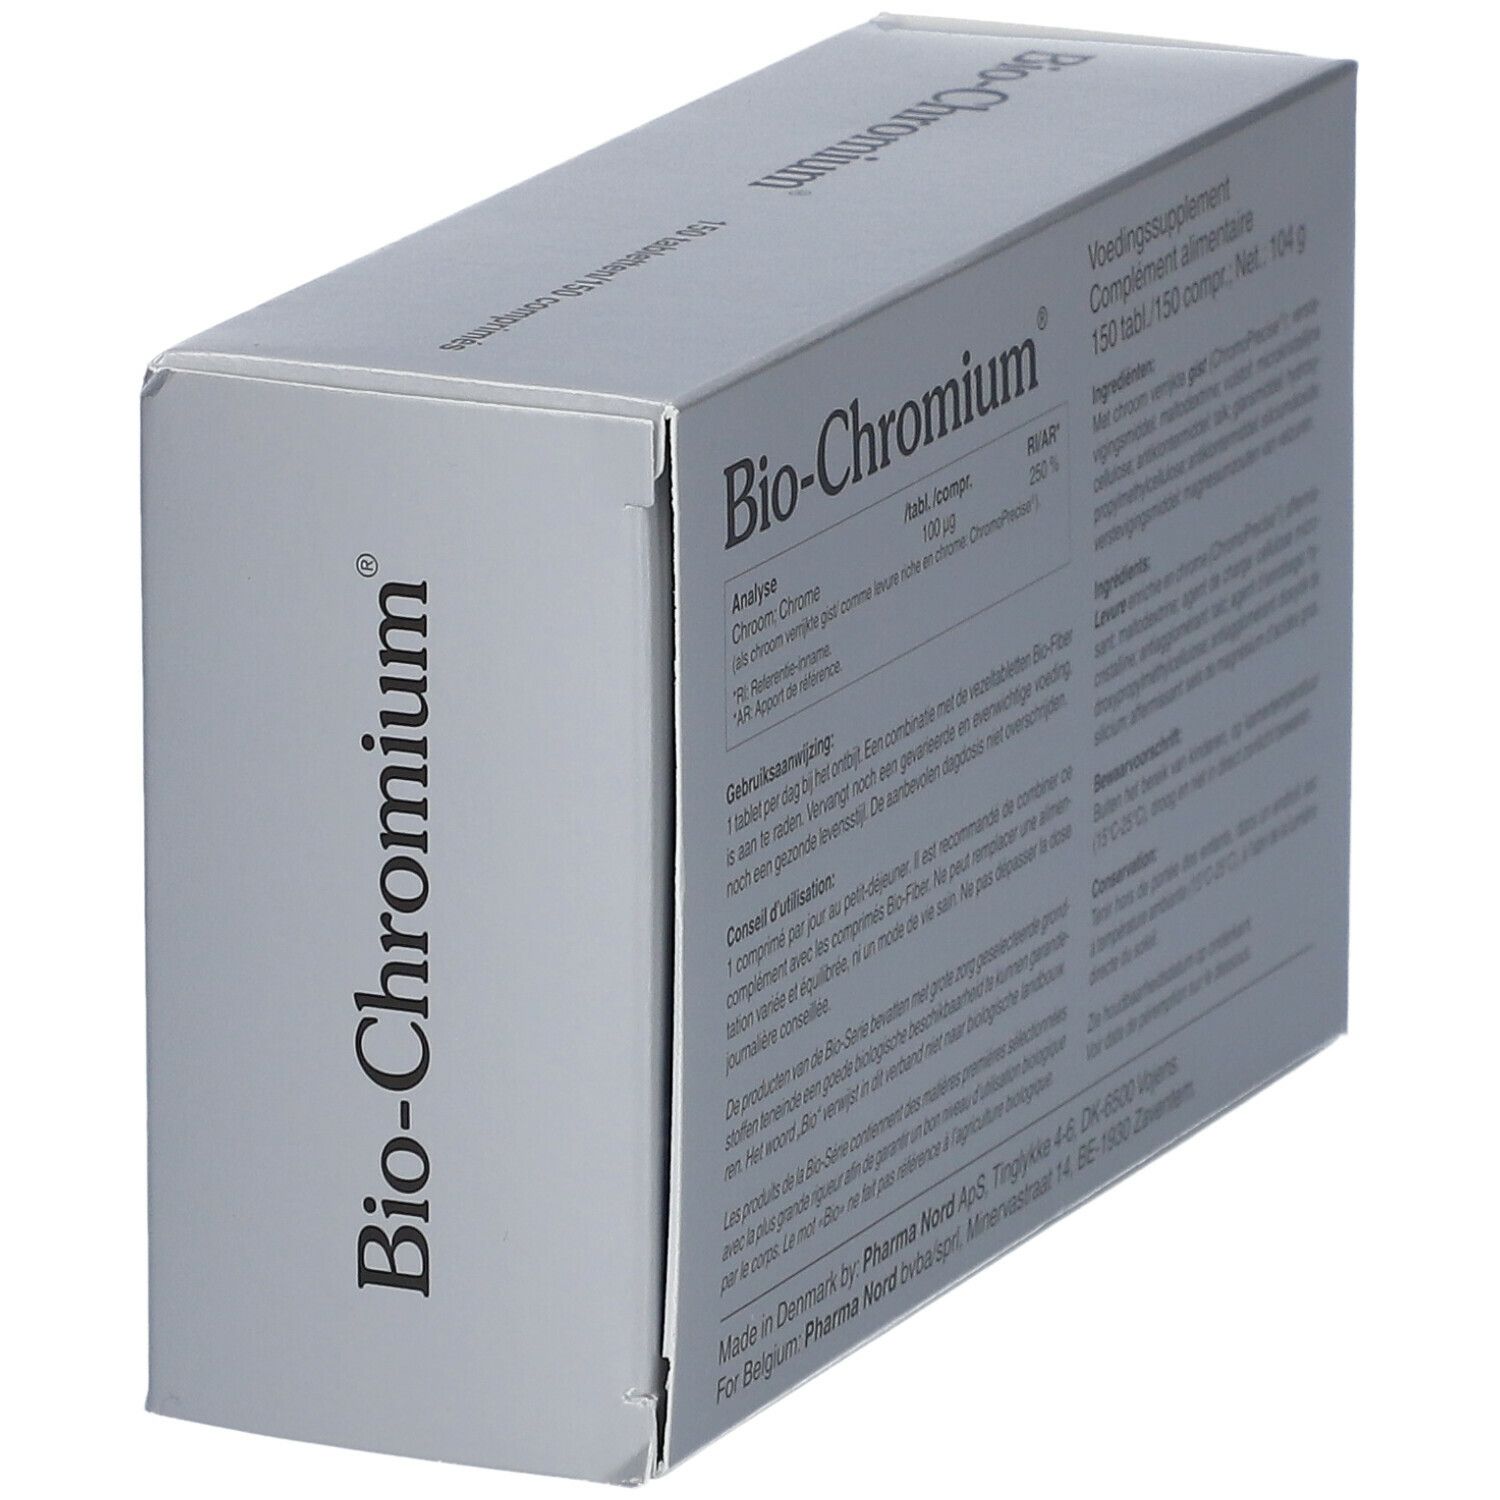 Pharma Nord Bio- Chromium® ChromoPrecise®